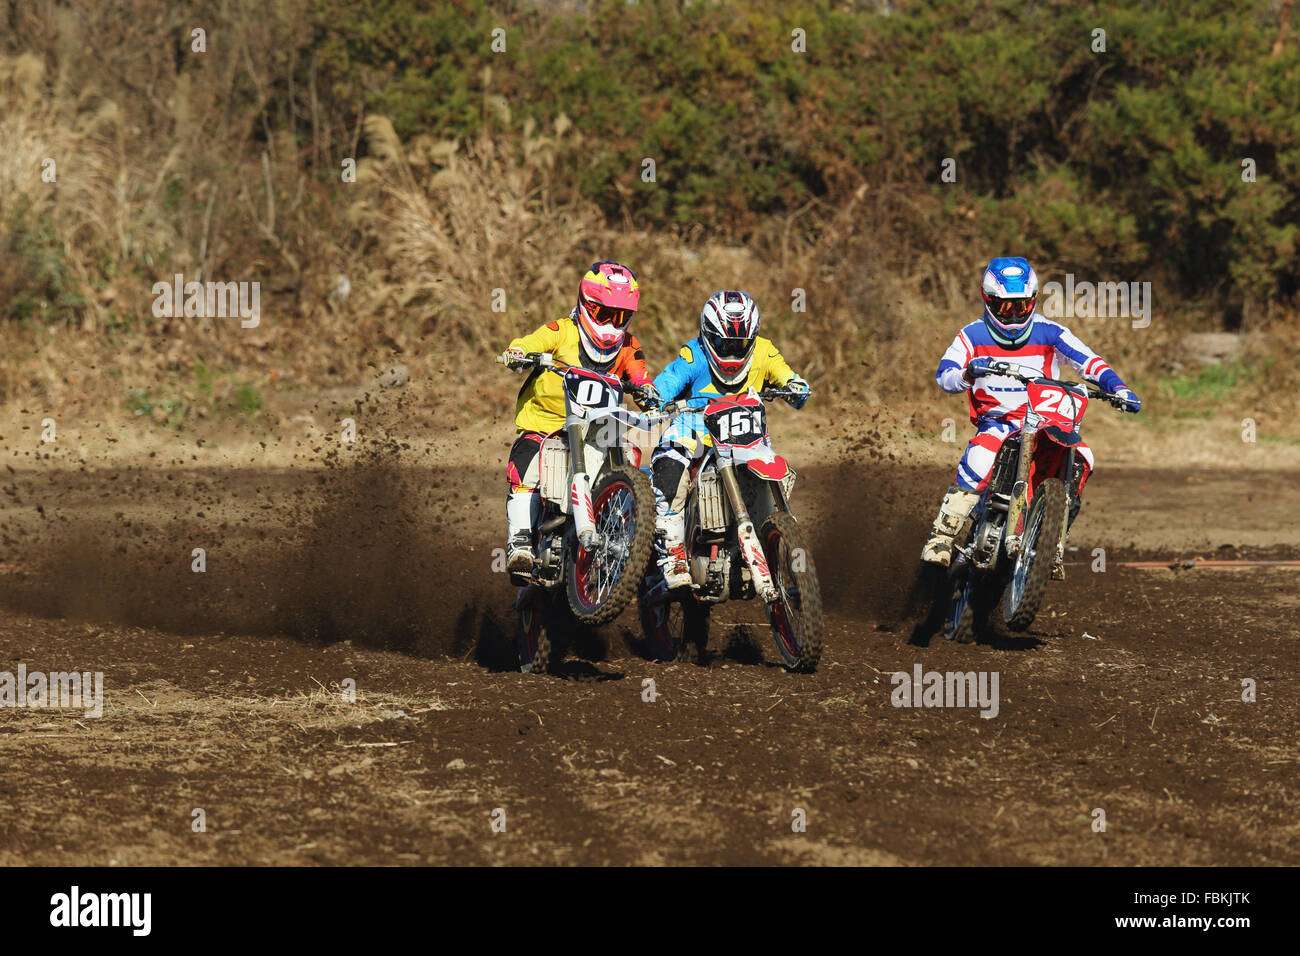 Motocross bikers on dirt track Stock Photo